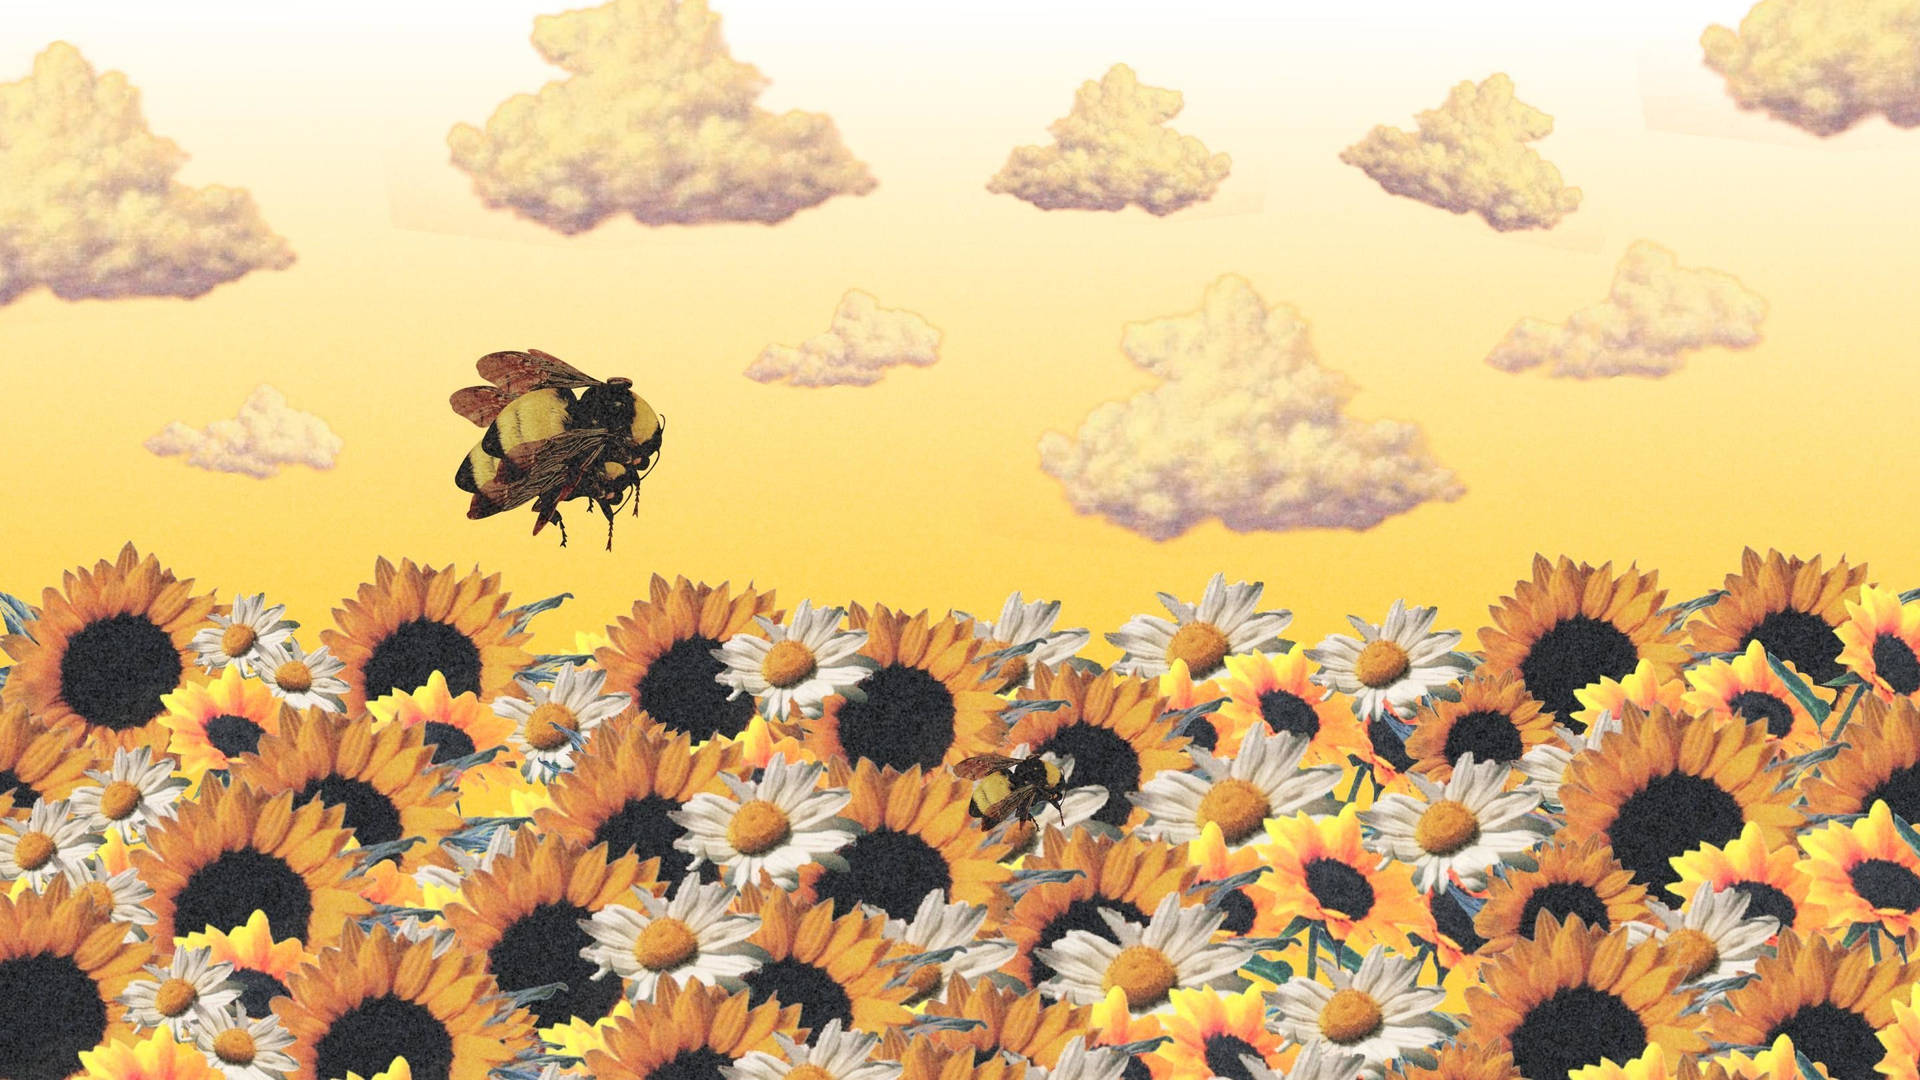 Cartoon Bee Over A Field Of Sunflowers